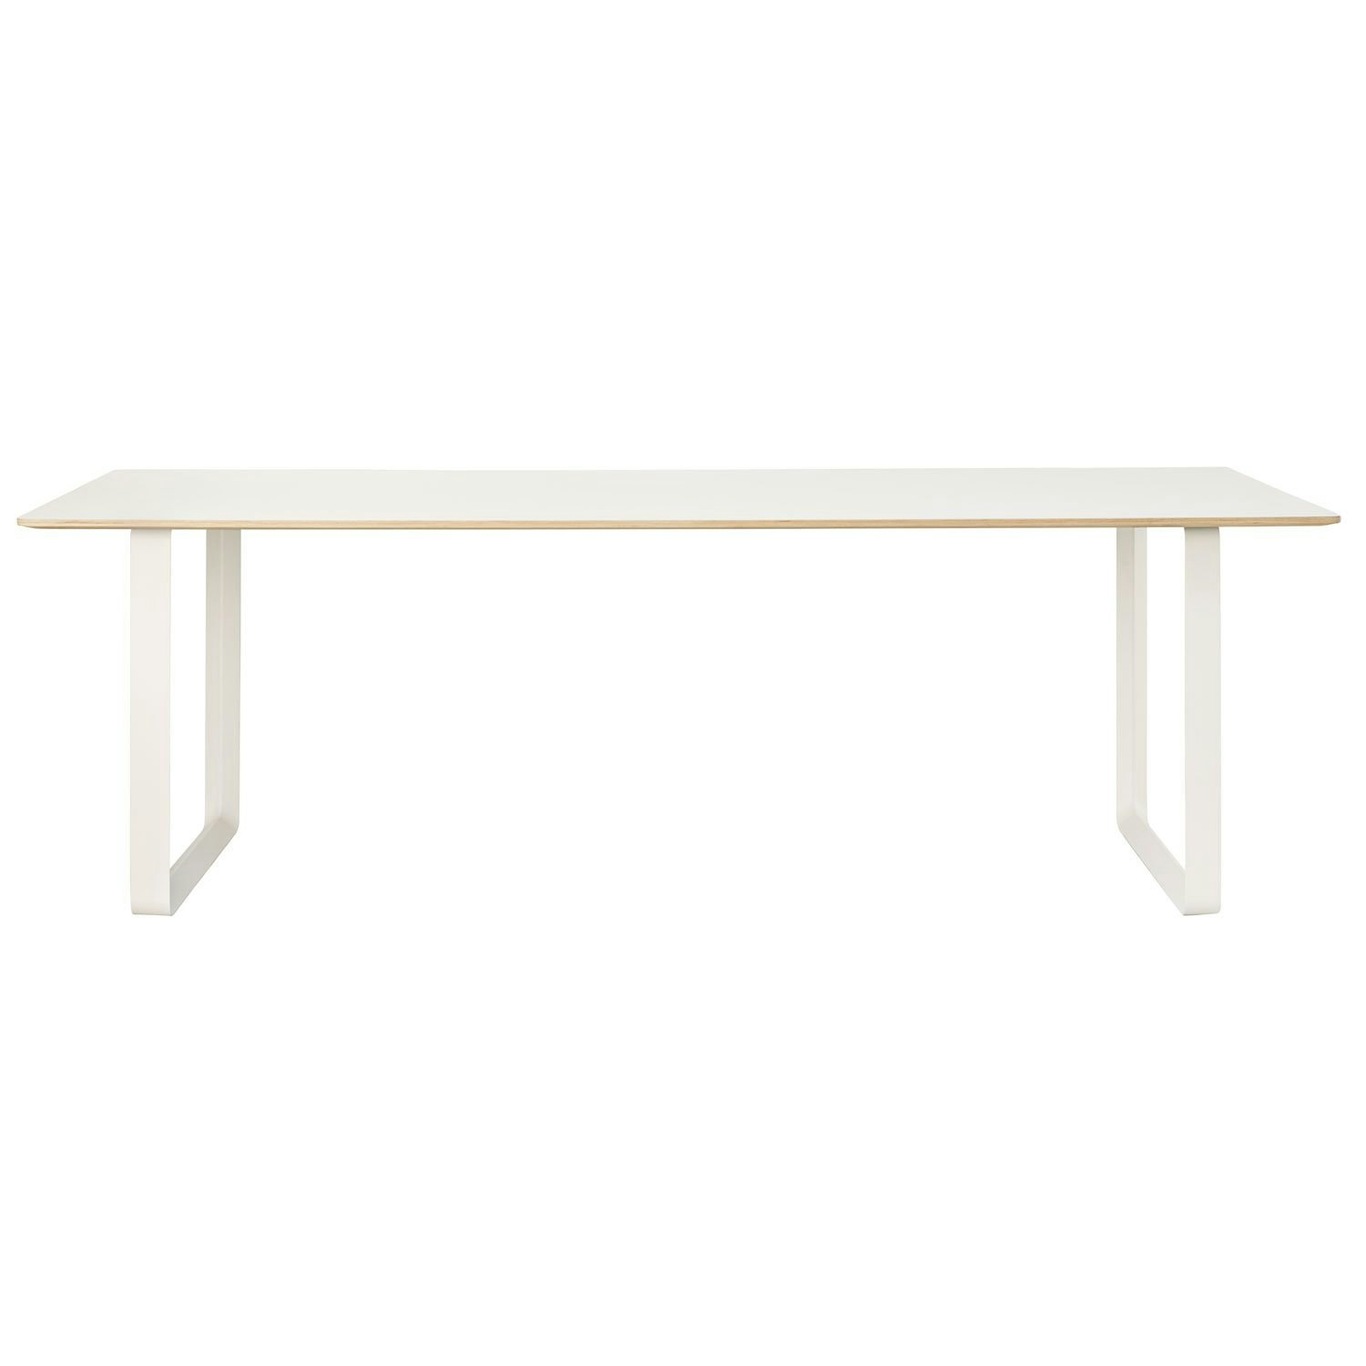 70/70 table 225 Cm, White